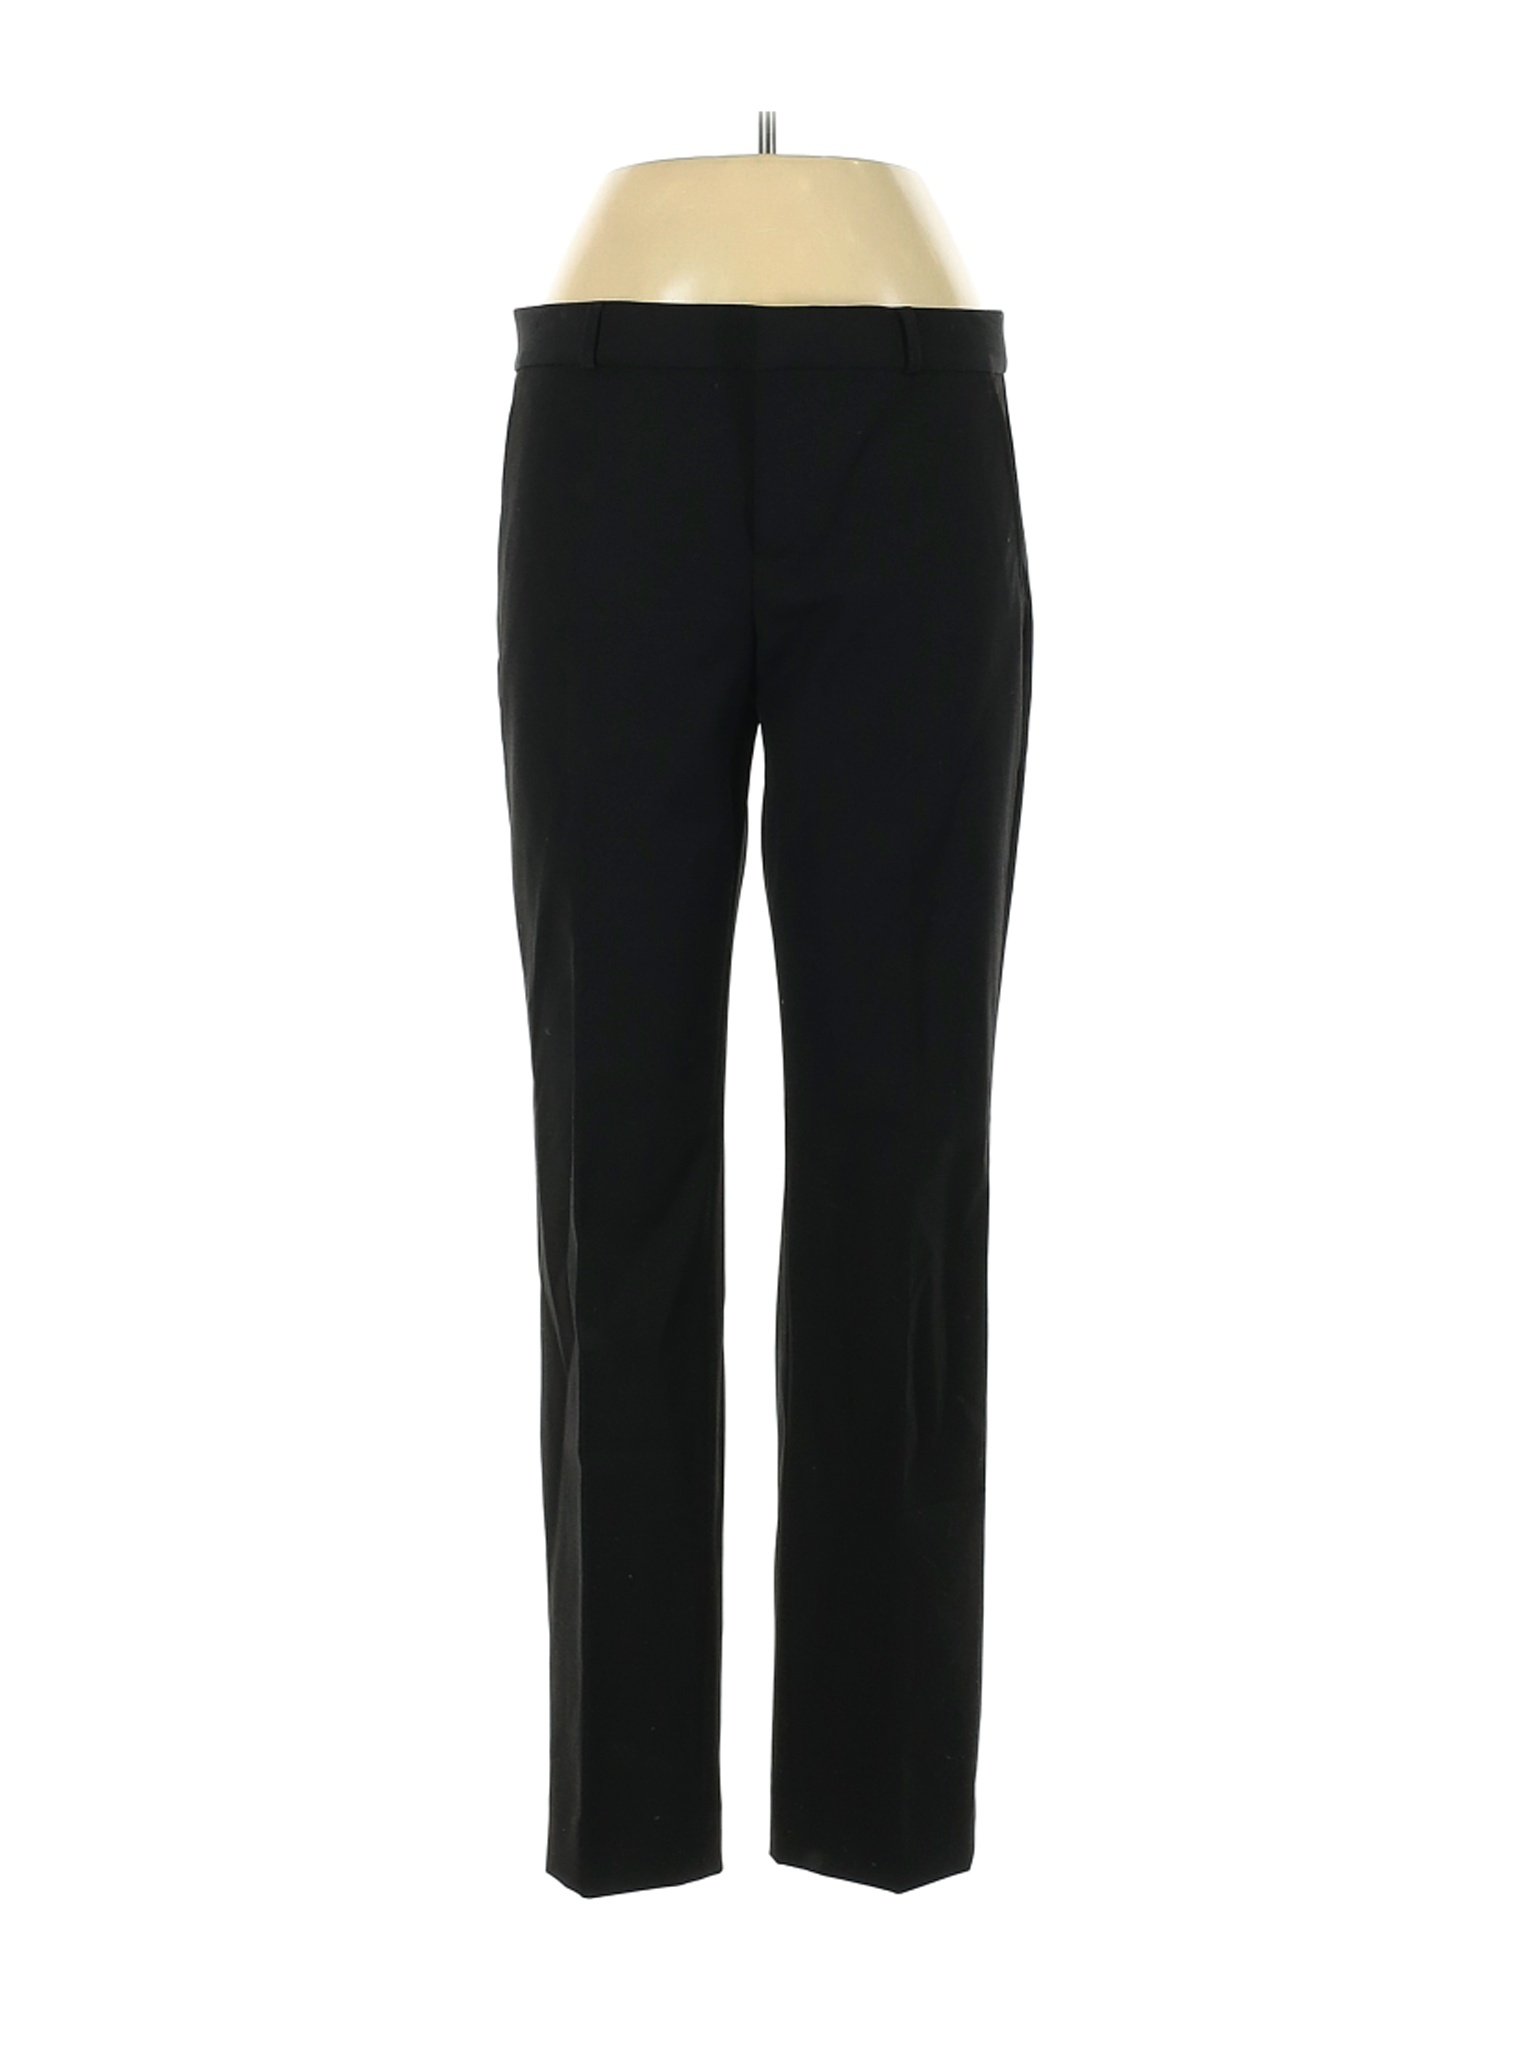 Banana Republic Women Black Dress Pants 8 | eBay